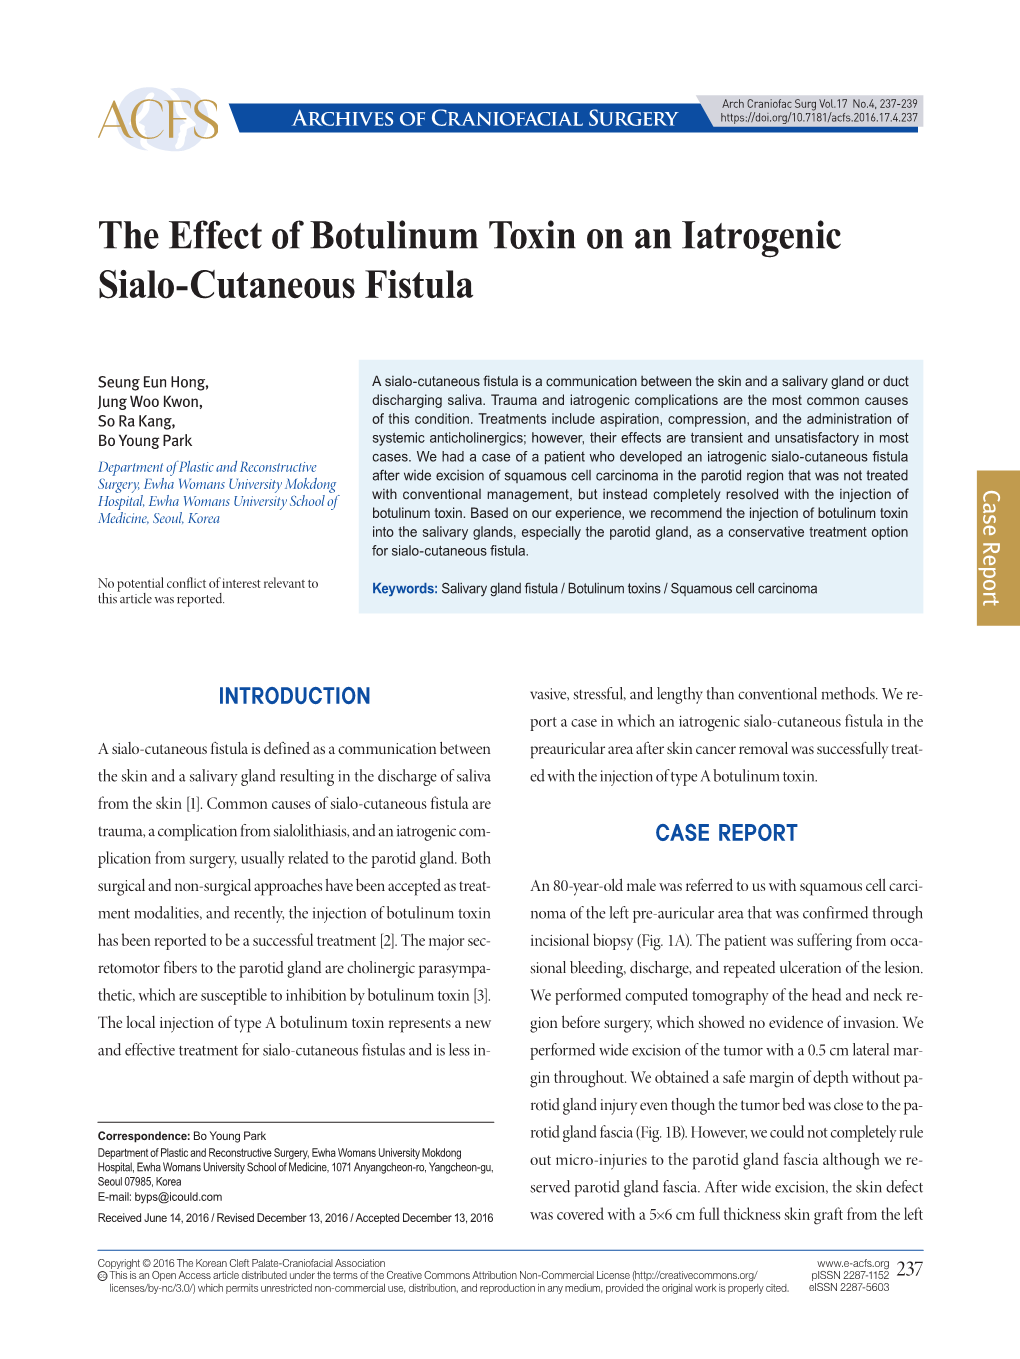 The Effect of Botulinum Toxin on an Iatrogenic Sialo-Cutaneous Fistula